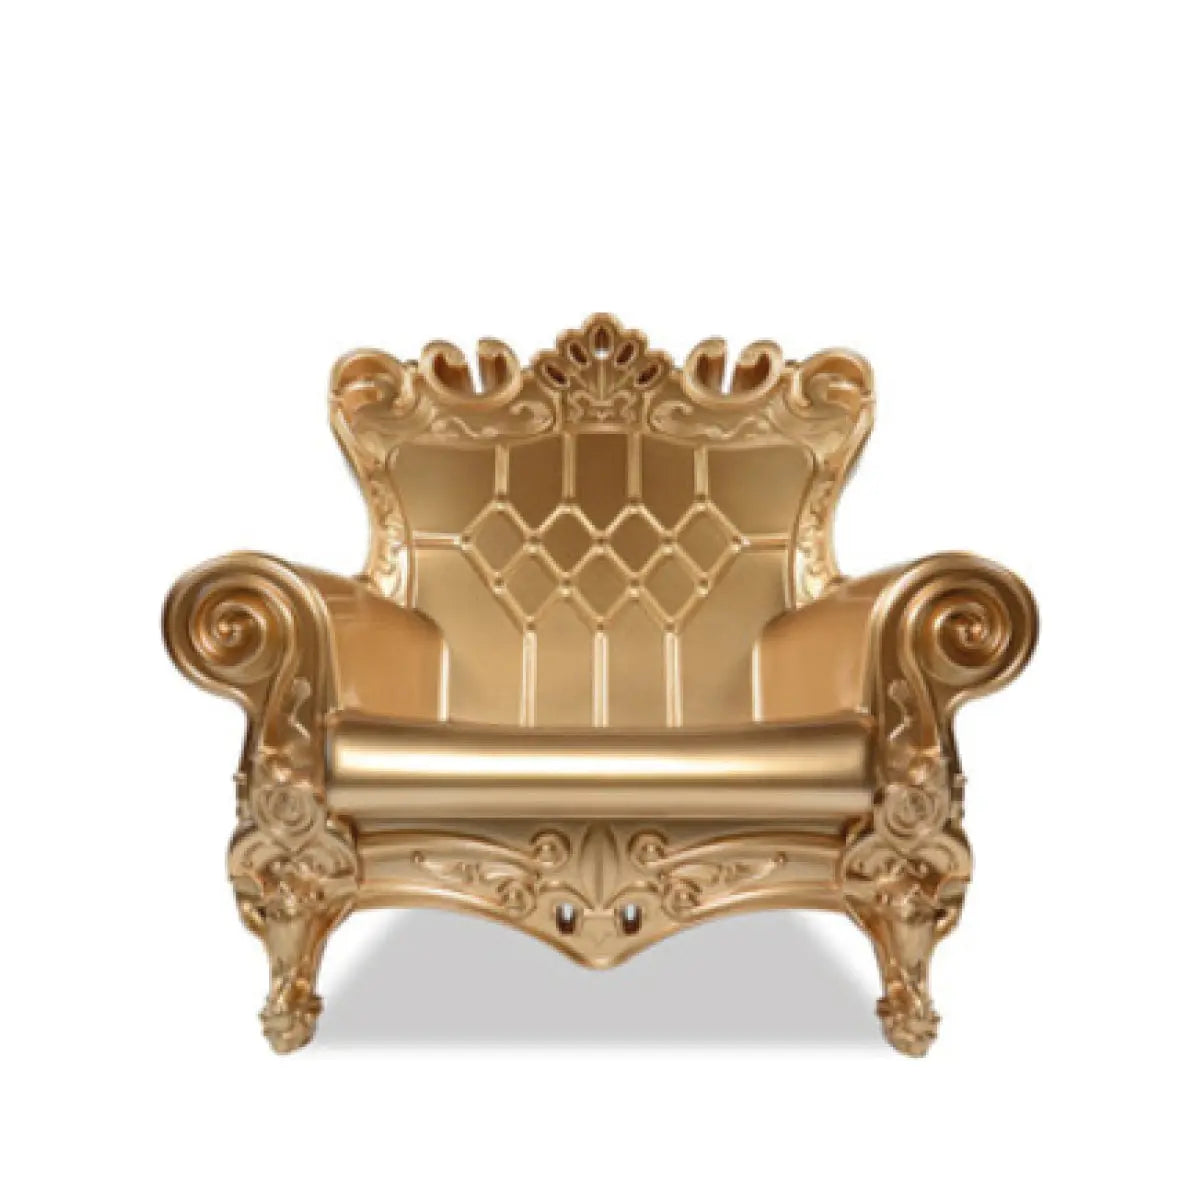 Queen of love lounge chair gold Desert River Rentals